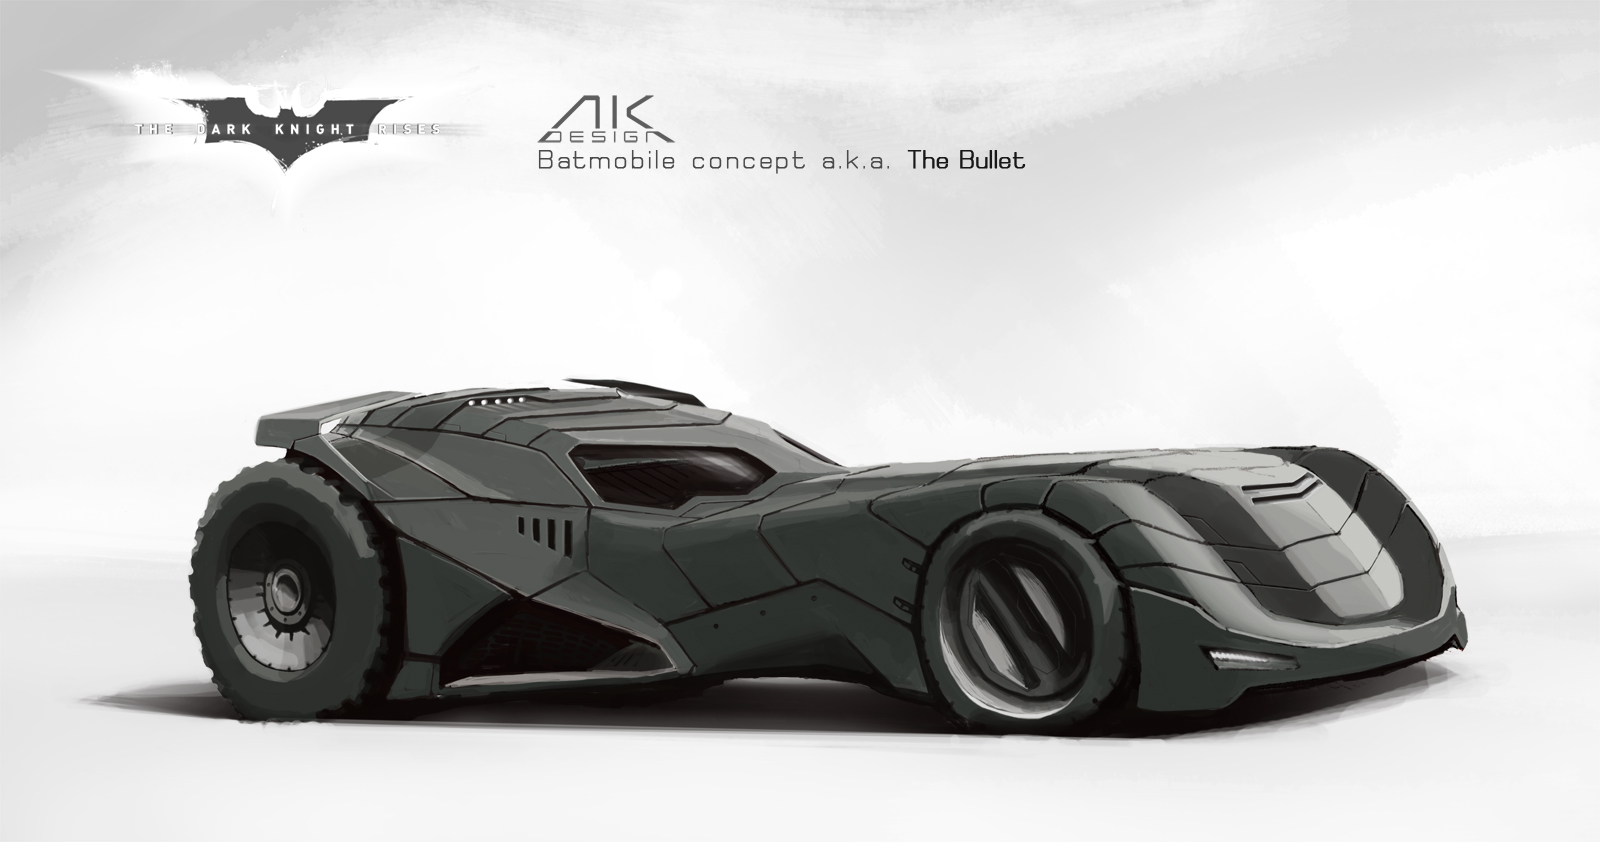 batmobile_concept_by_annaeus-d3kir4k